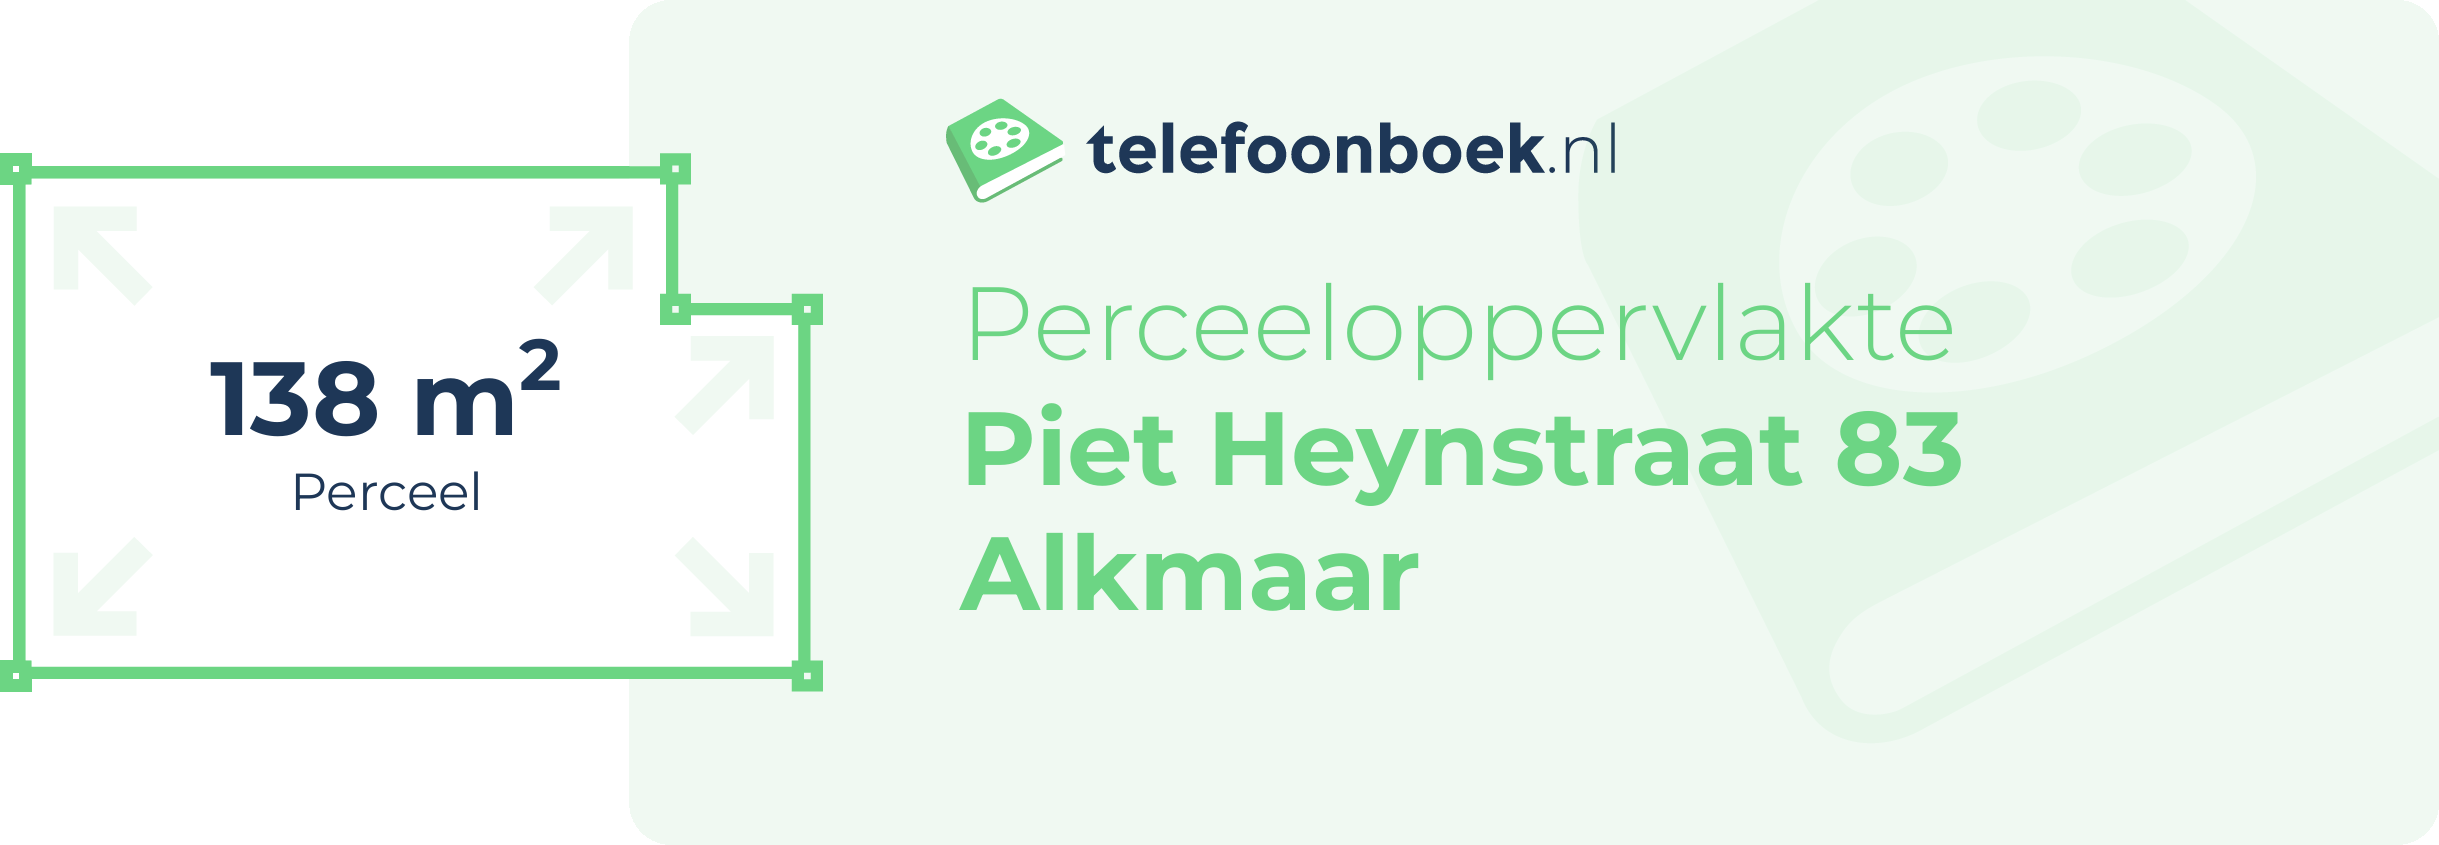 Perceeloppervlakte Piet Heynstraat 83 Alkmaar